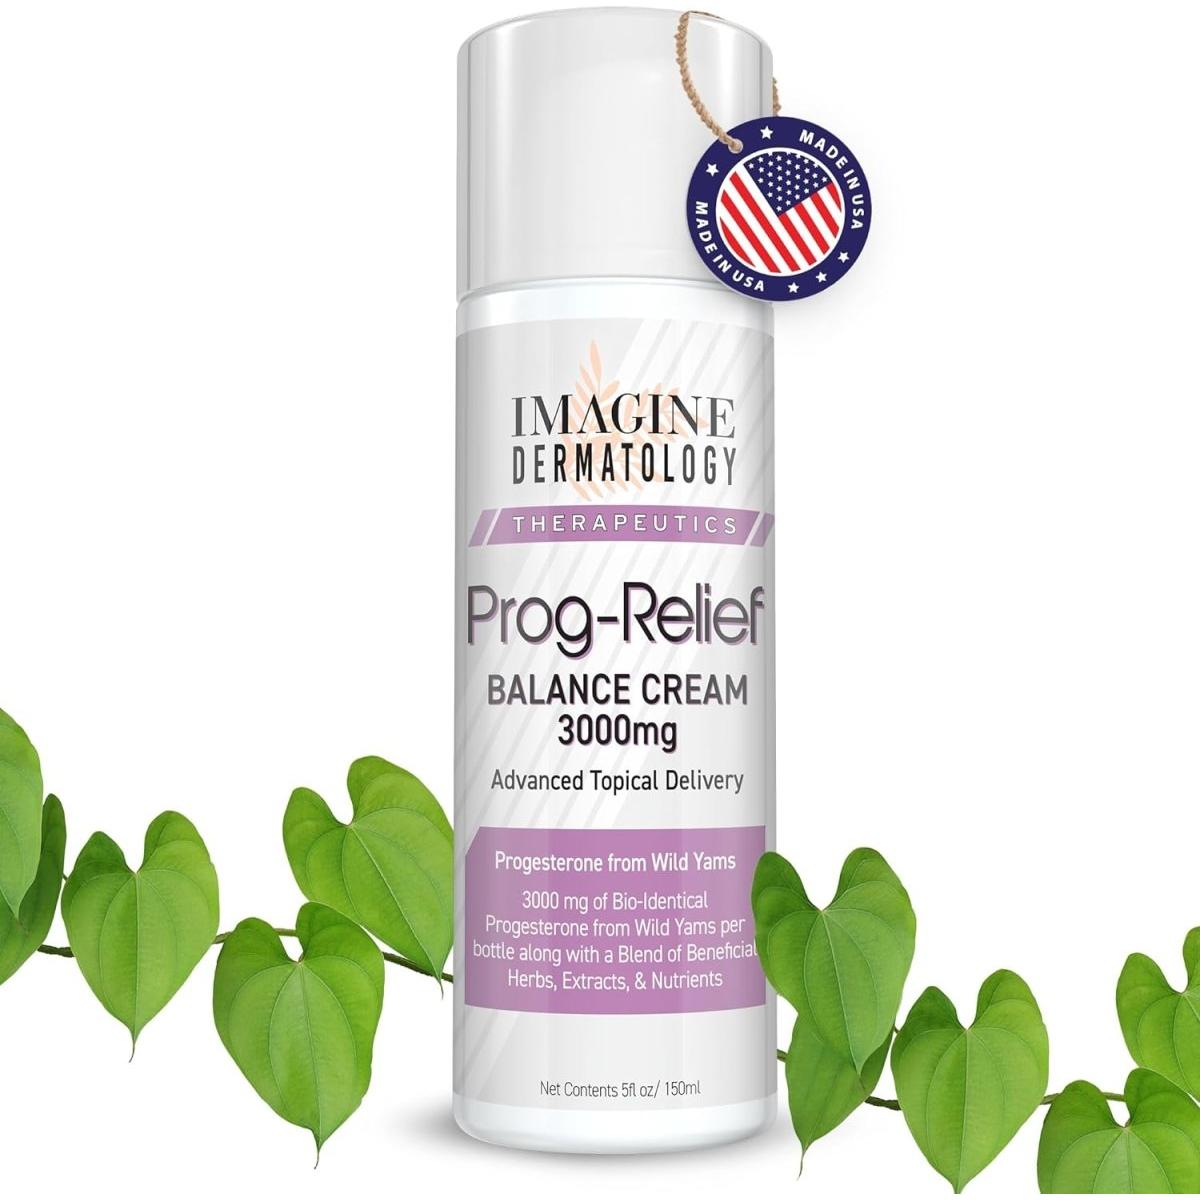 Imagine Dermatology Prog Relief Balance Cream 3000mg, 150 Pump Doses - 150ml - Glam Global UK